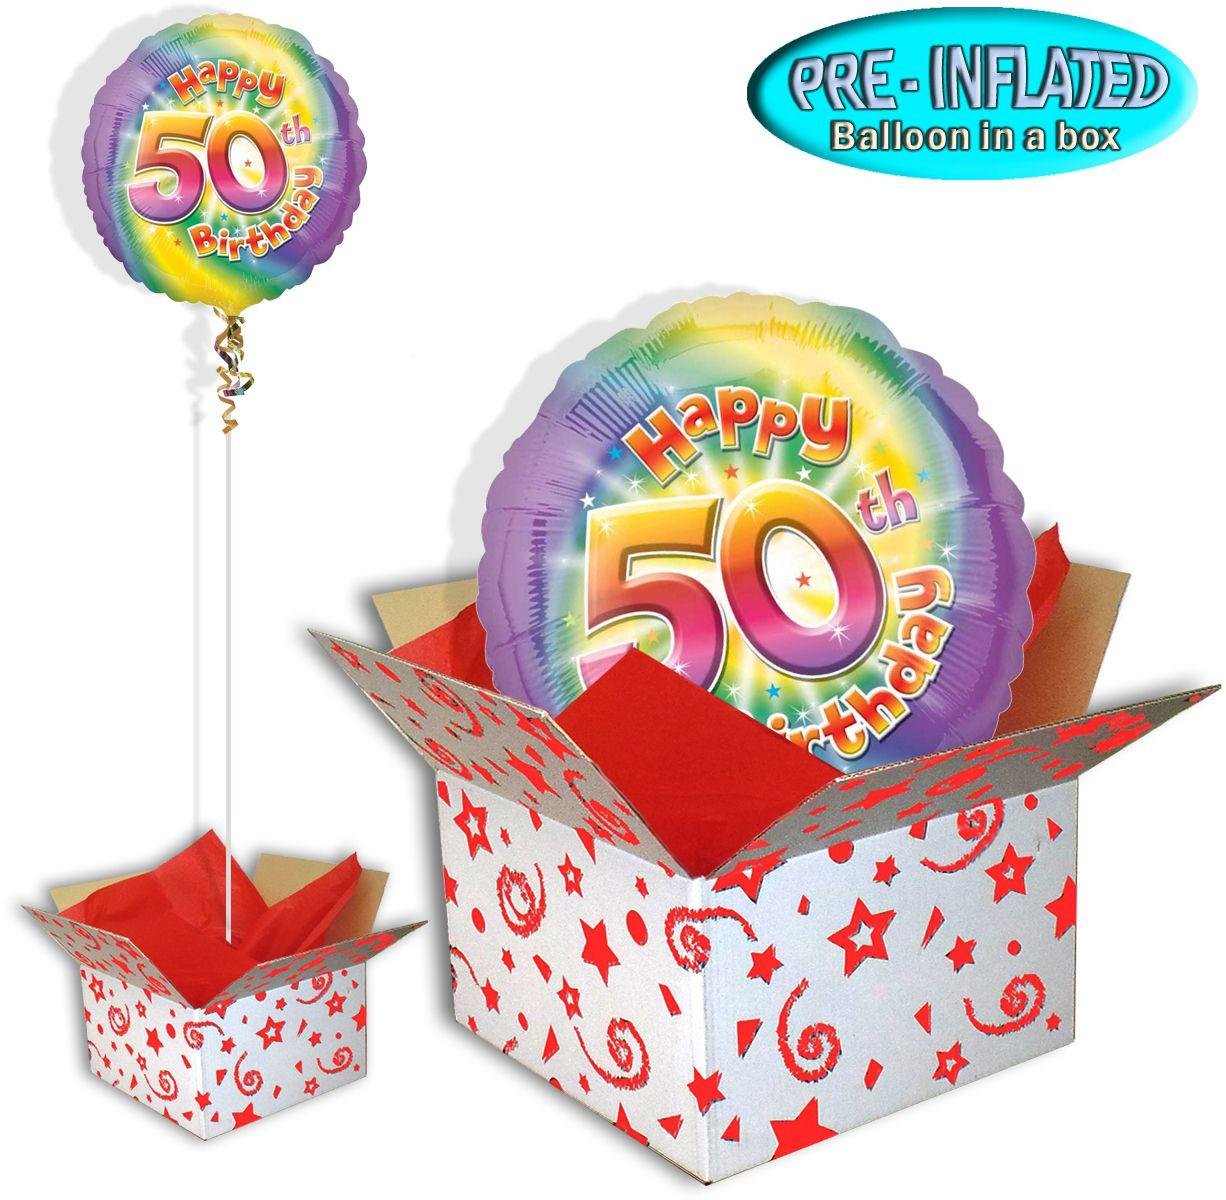 Happy 50th Birthday Balloon in a Box.